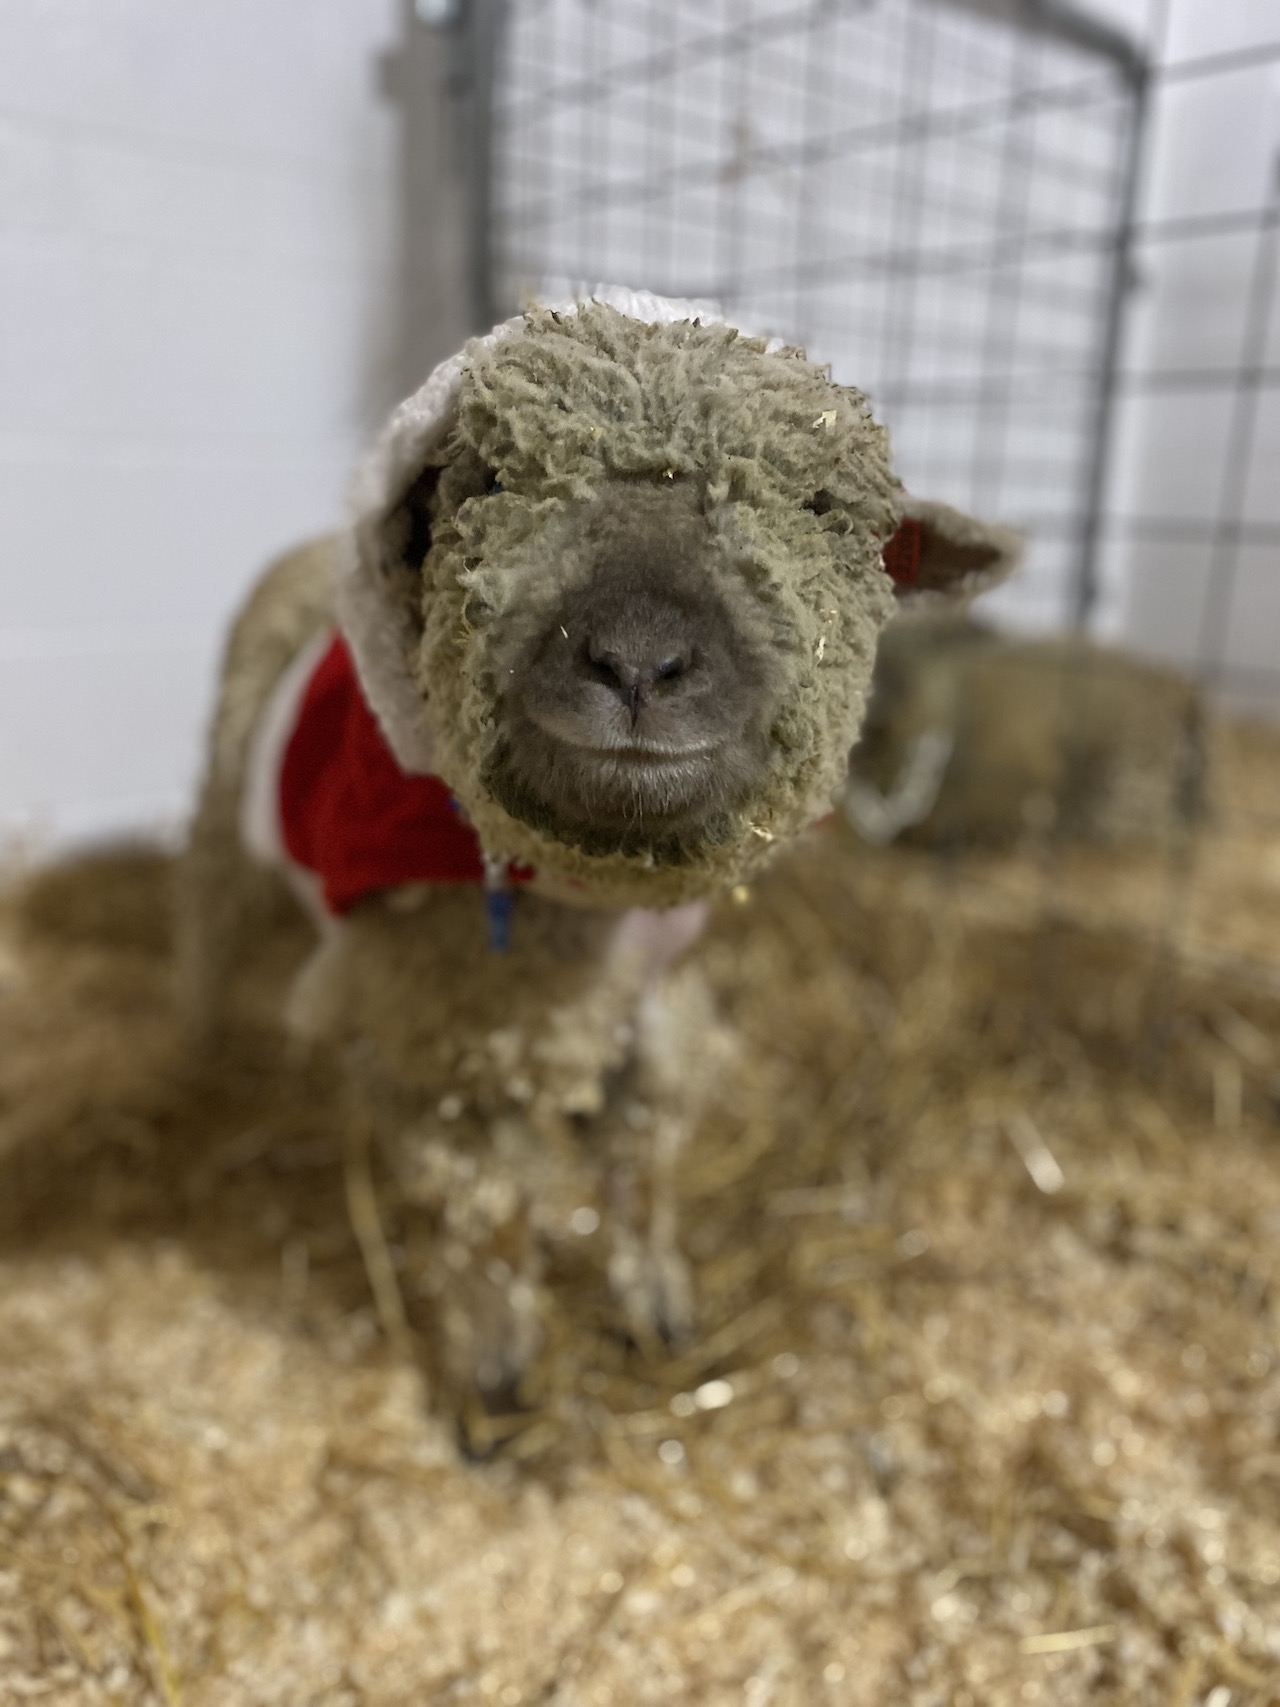 A small sheep wearing a Santa sweater